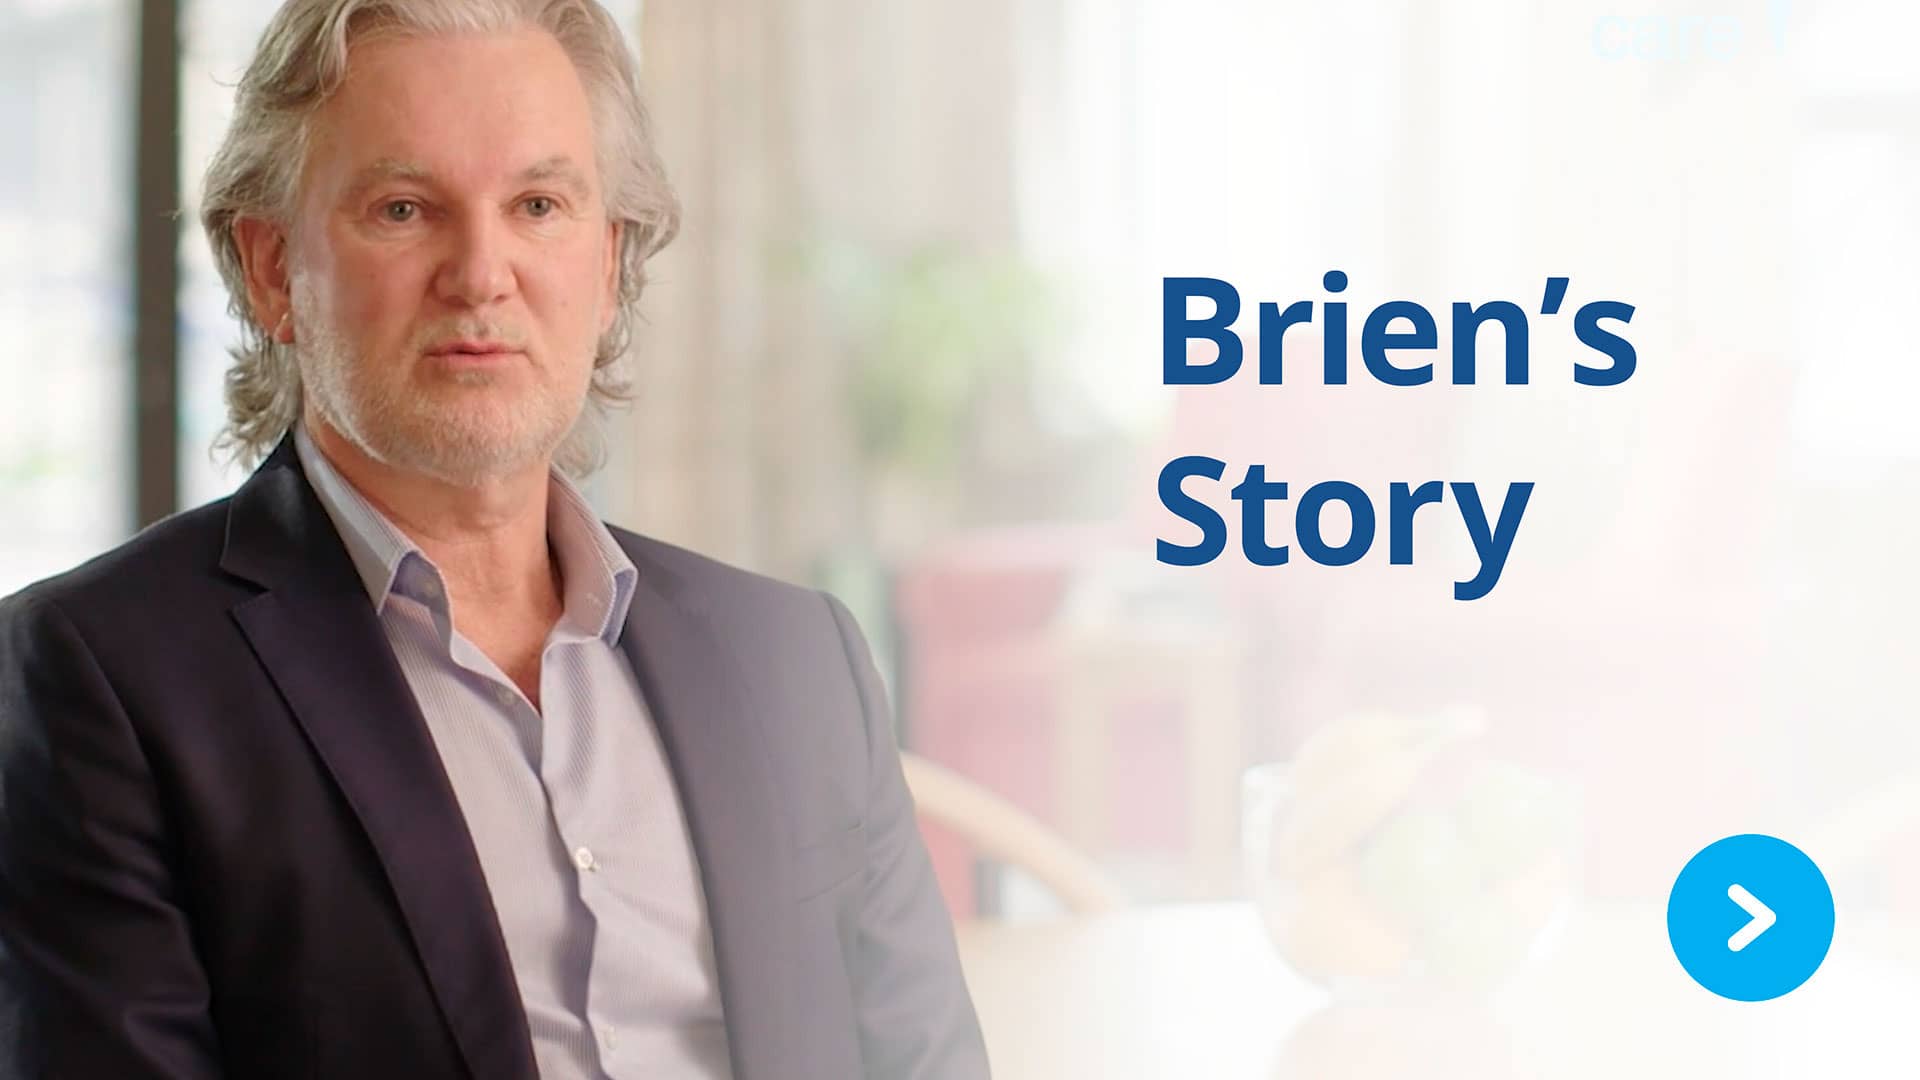 Brien's Story